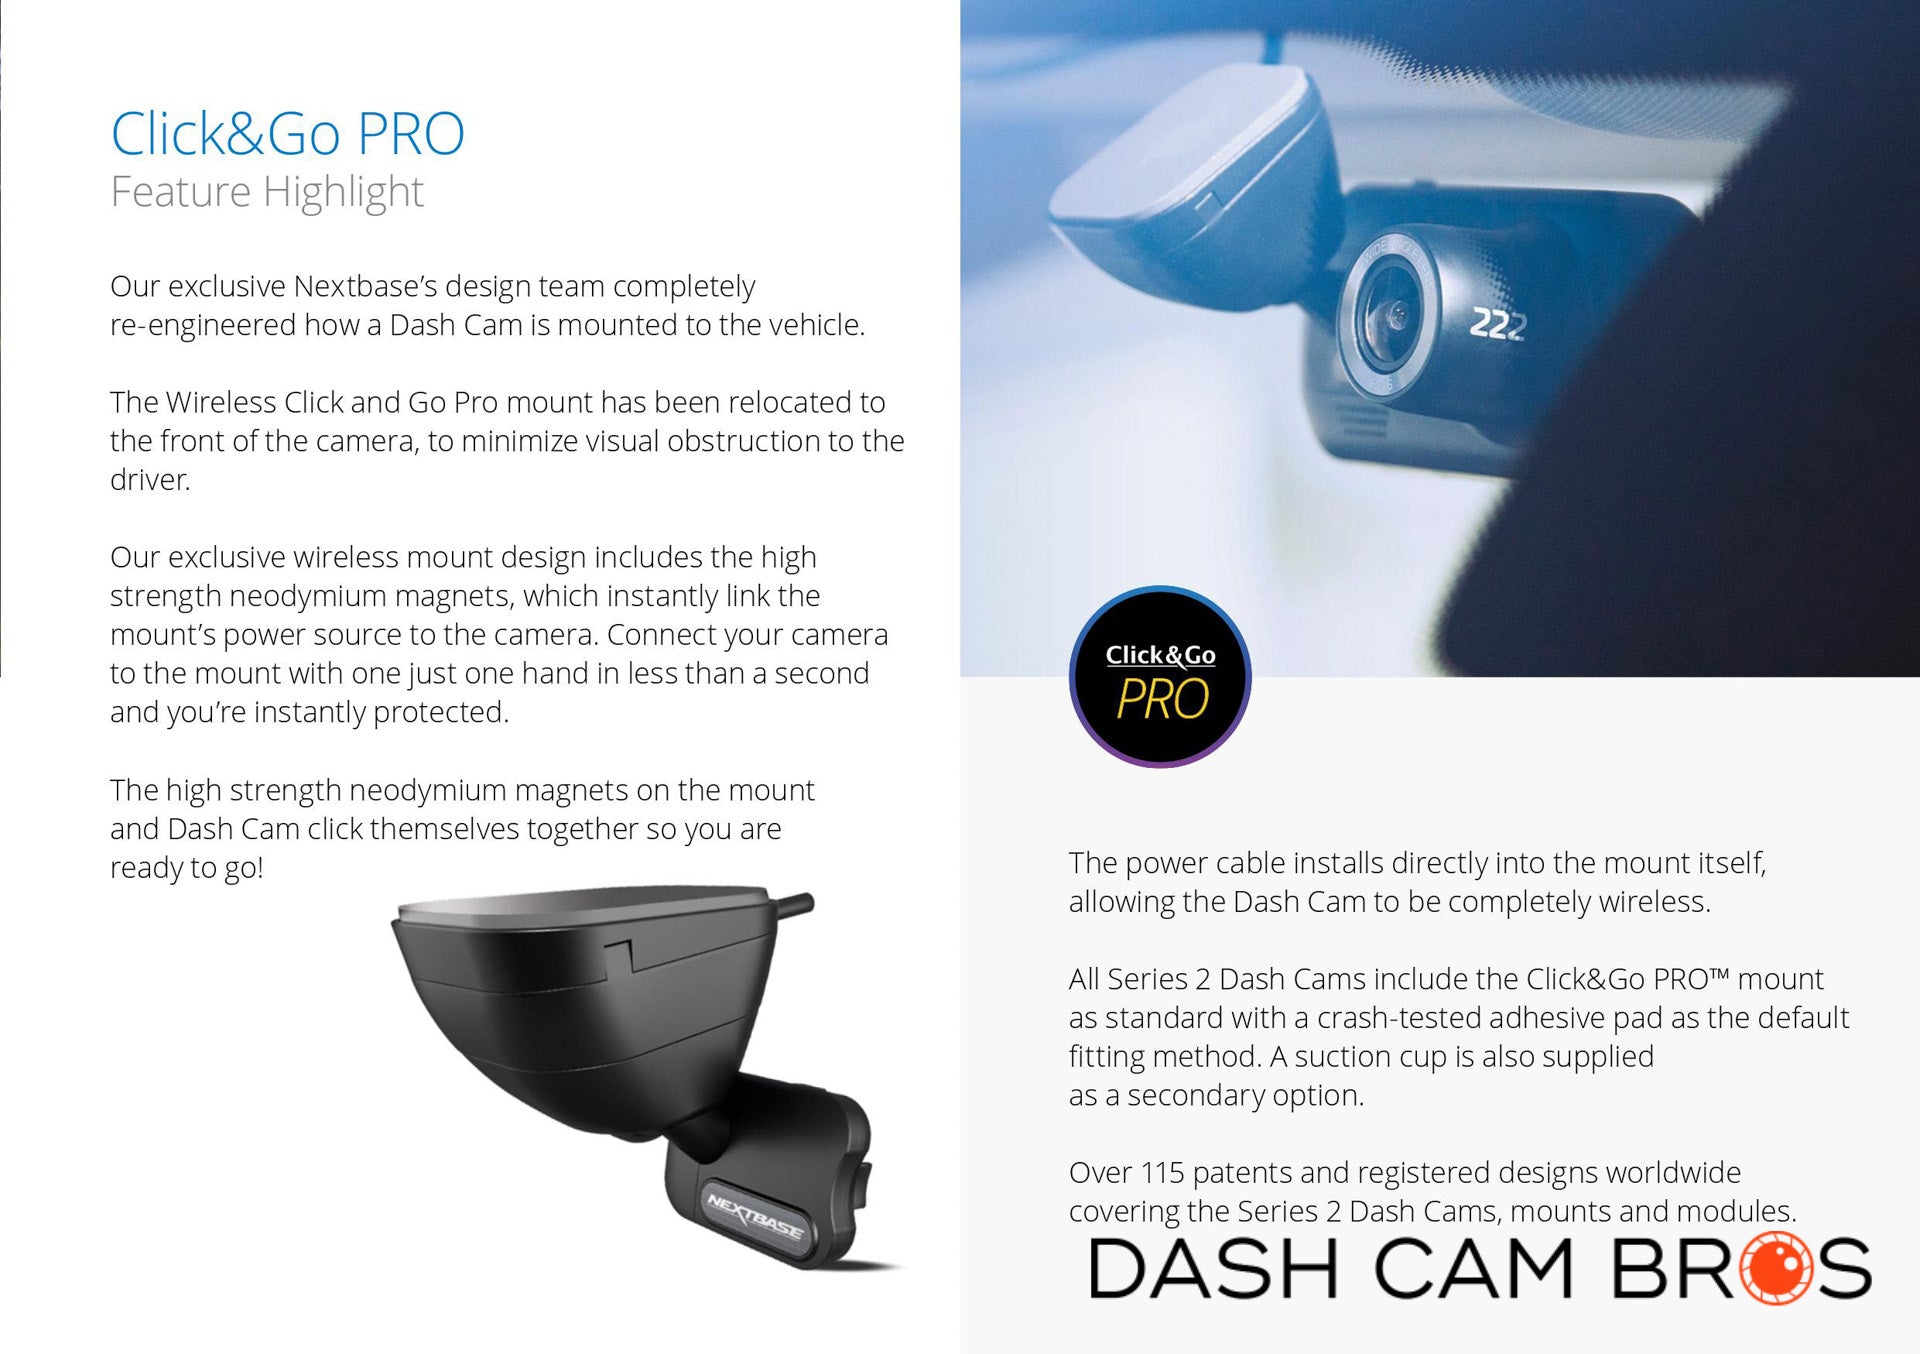  Nextbase 422GW Dash Cam + Rear Camera + Hardwire Kit - 1440p HD  Recording in Car Camera - Wi-fi GPS Bluetooth Alexa Enabled - Parking Mode  - Night Vision - Loop Recording : Electronics